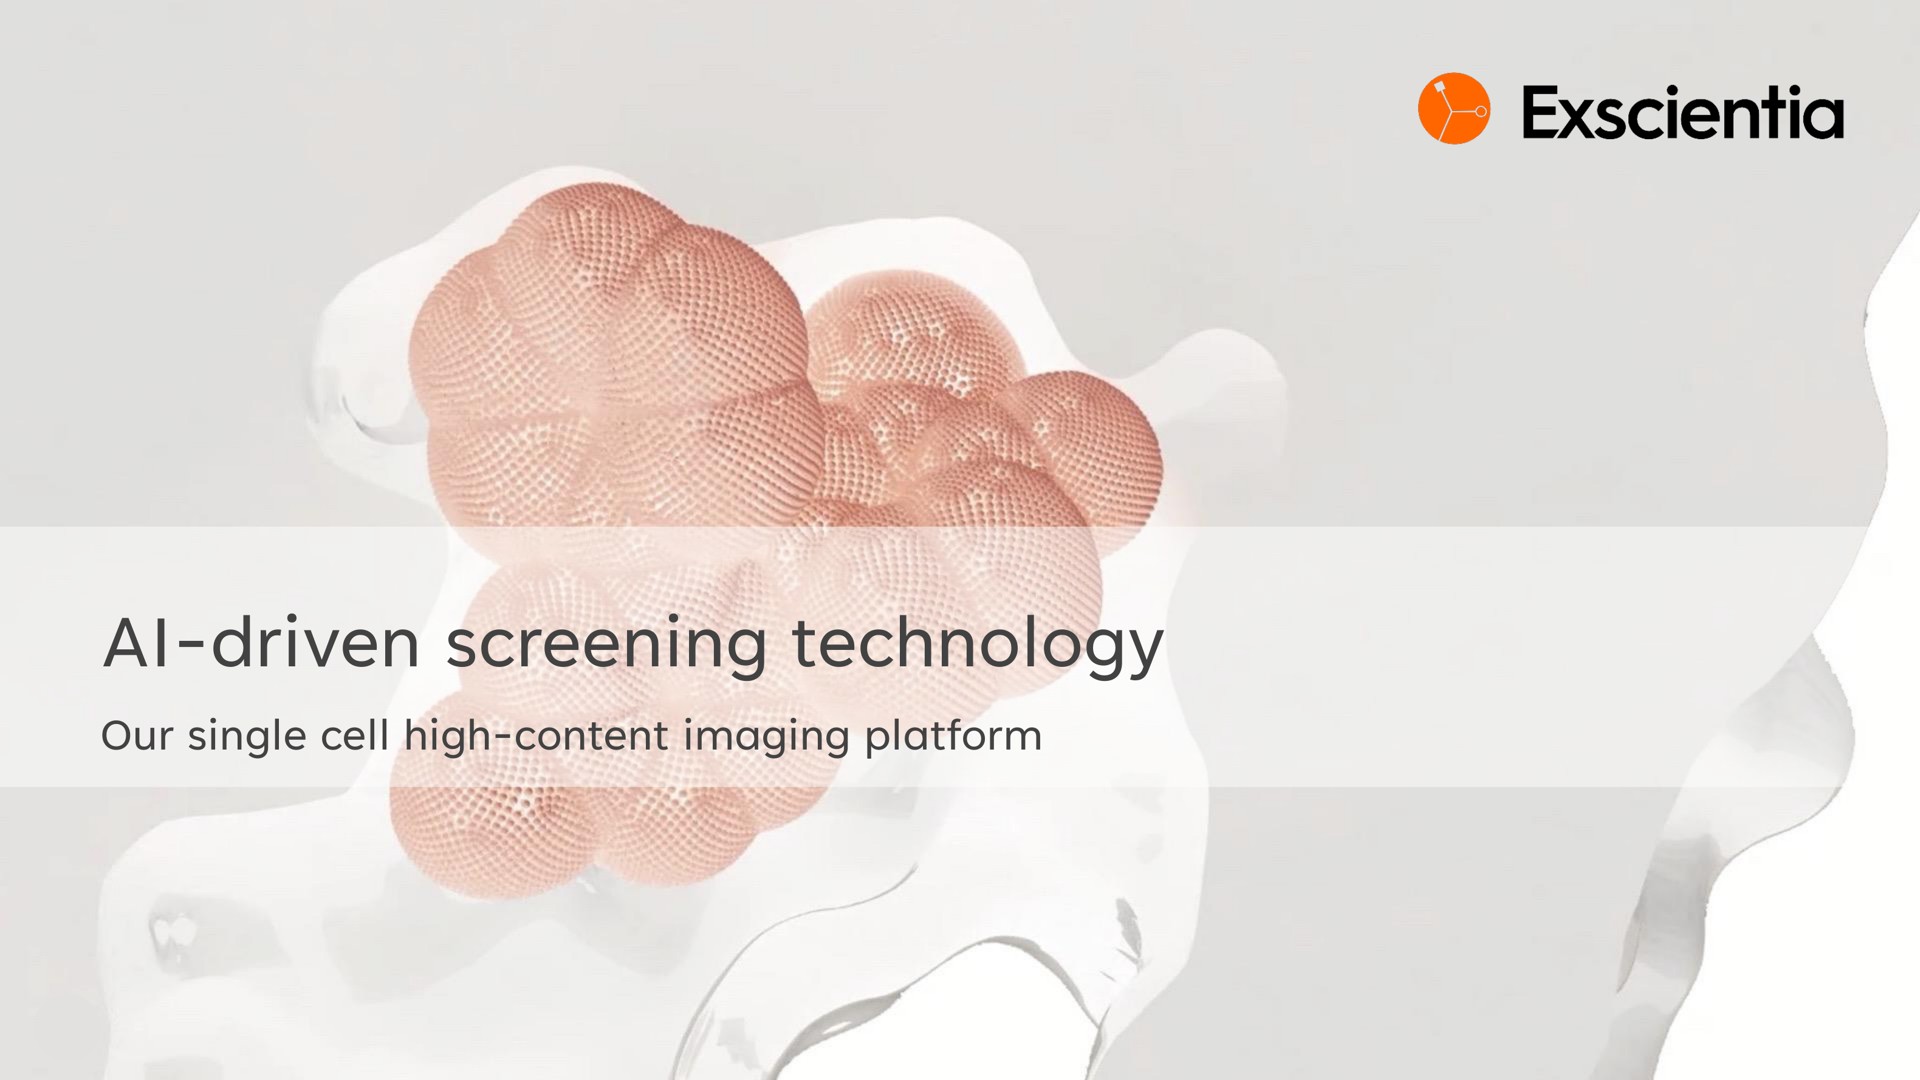 driven screening technology | Exscientia